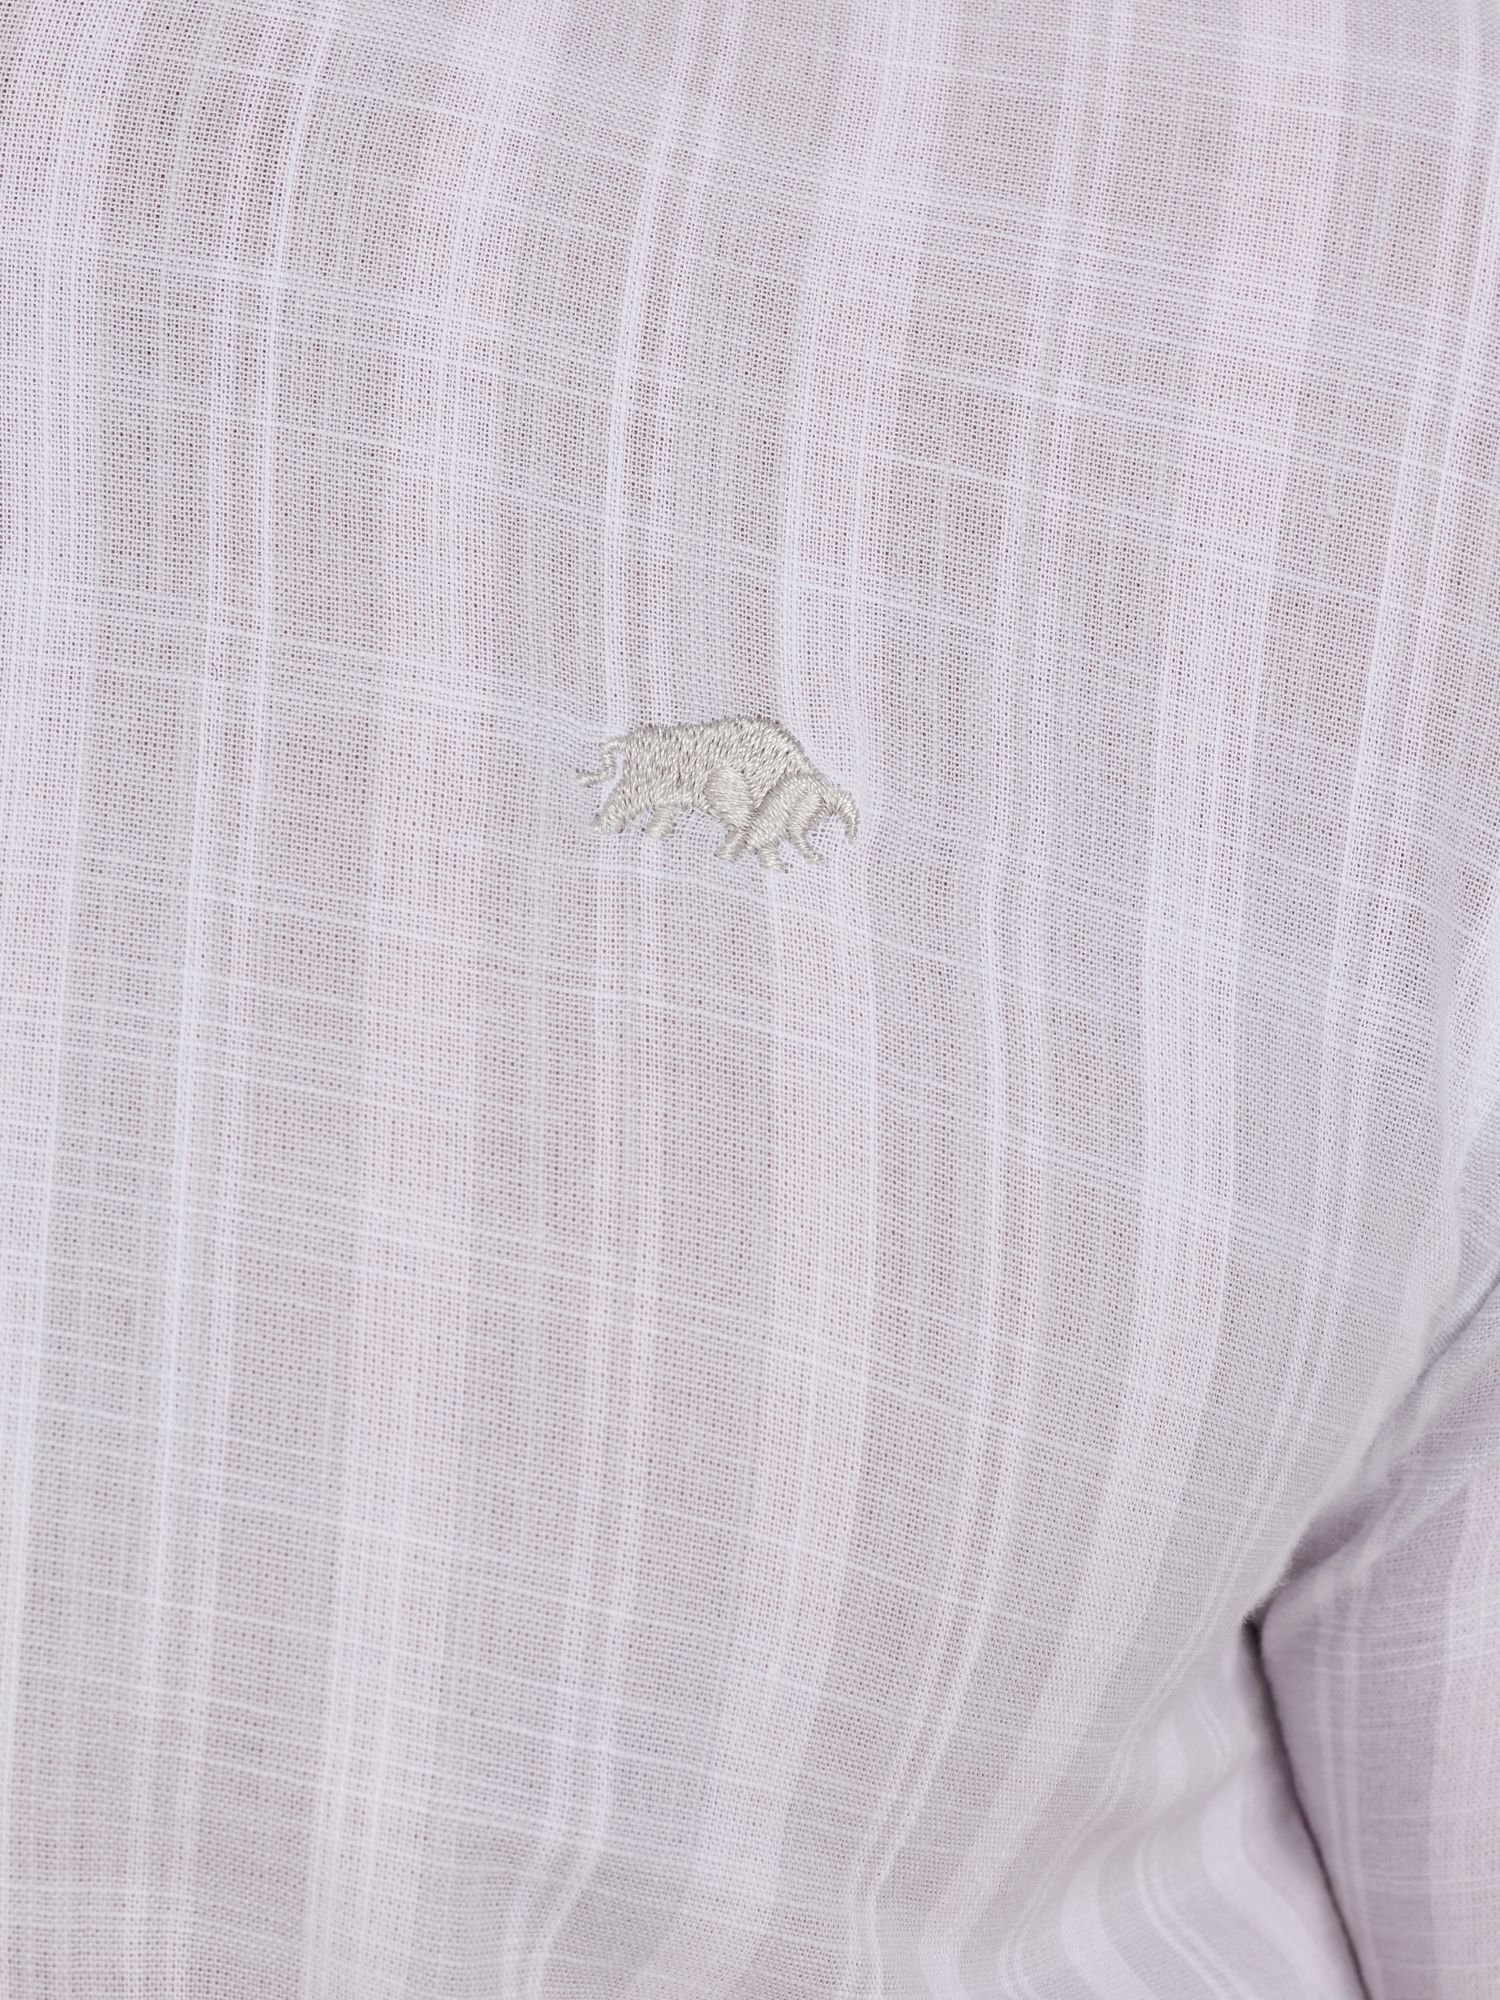 Raging Bull Short Sleeve Multi Stripe Linen Look Shirt, Grey, XL